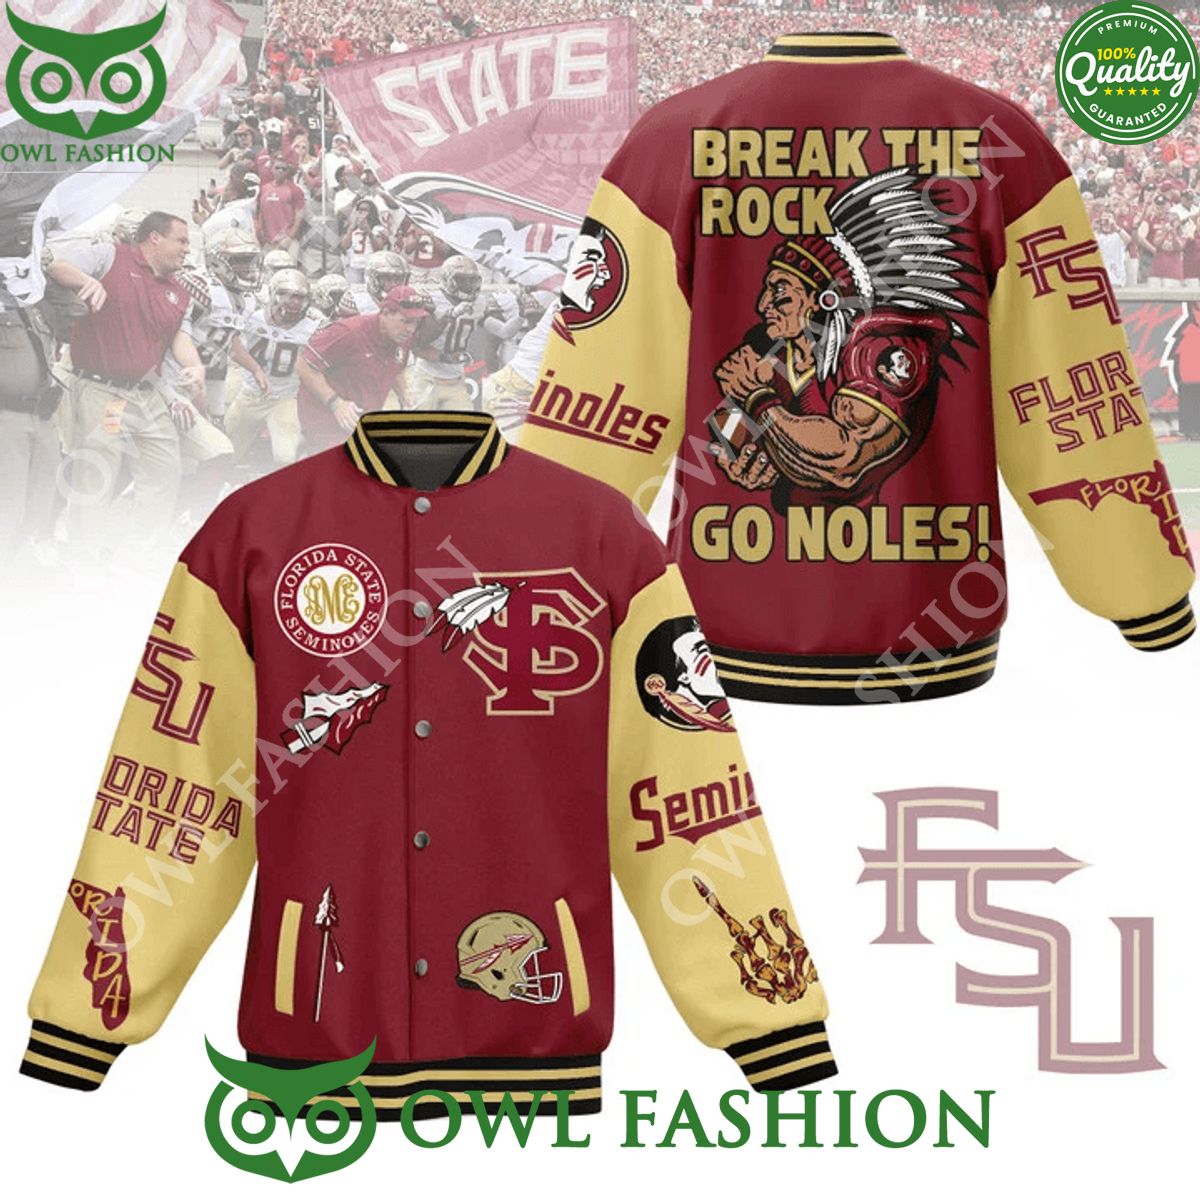 Break the Rock Go Noles Florida State Seminoles football NCAA Baseball Jacket Varsity